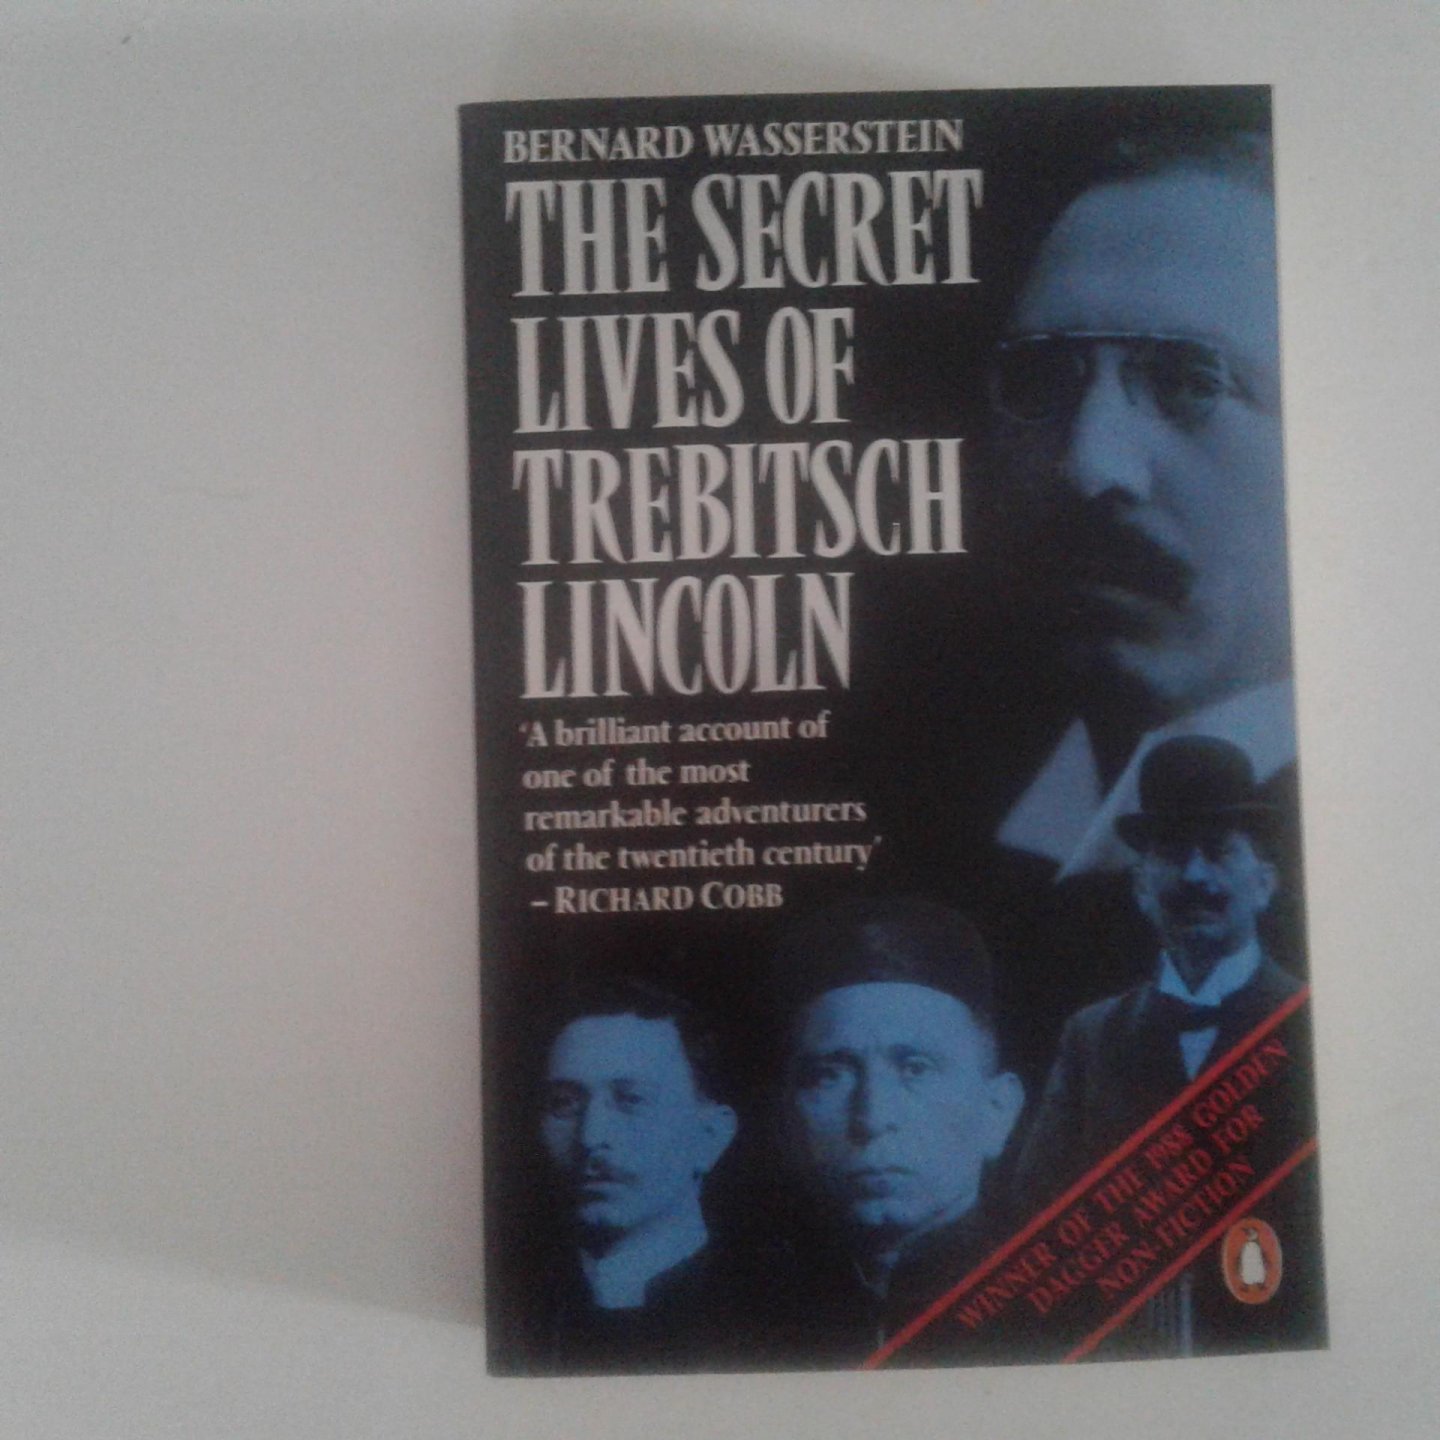 Wasserstein, Bernard - The Secret Lives of Trebitsch Lincoln